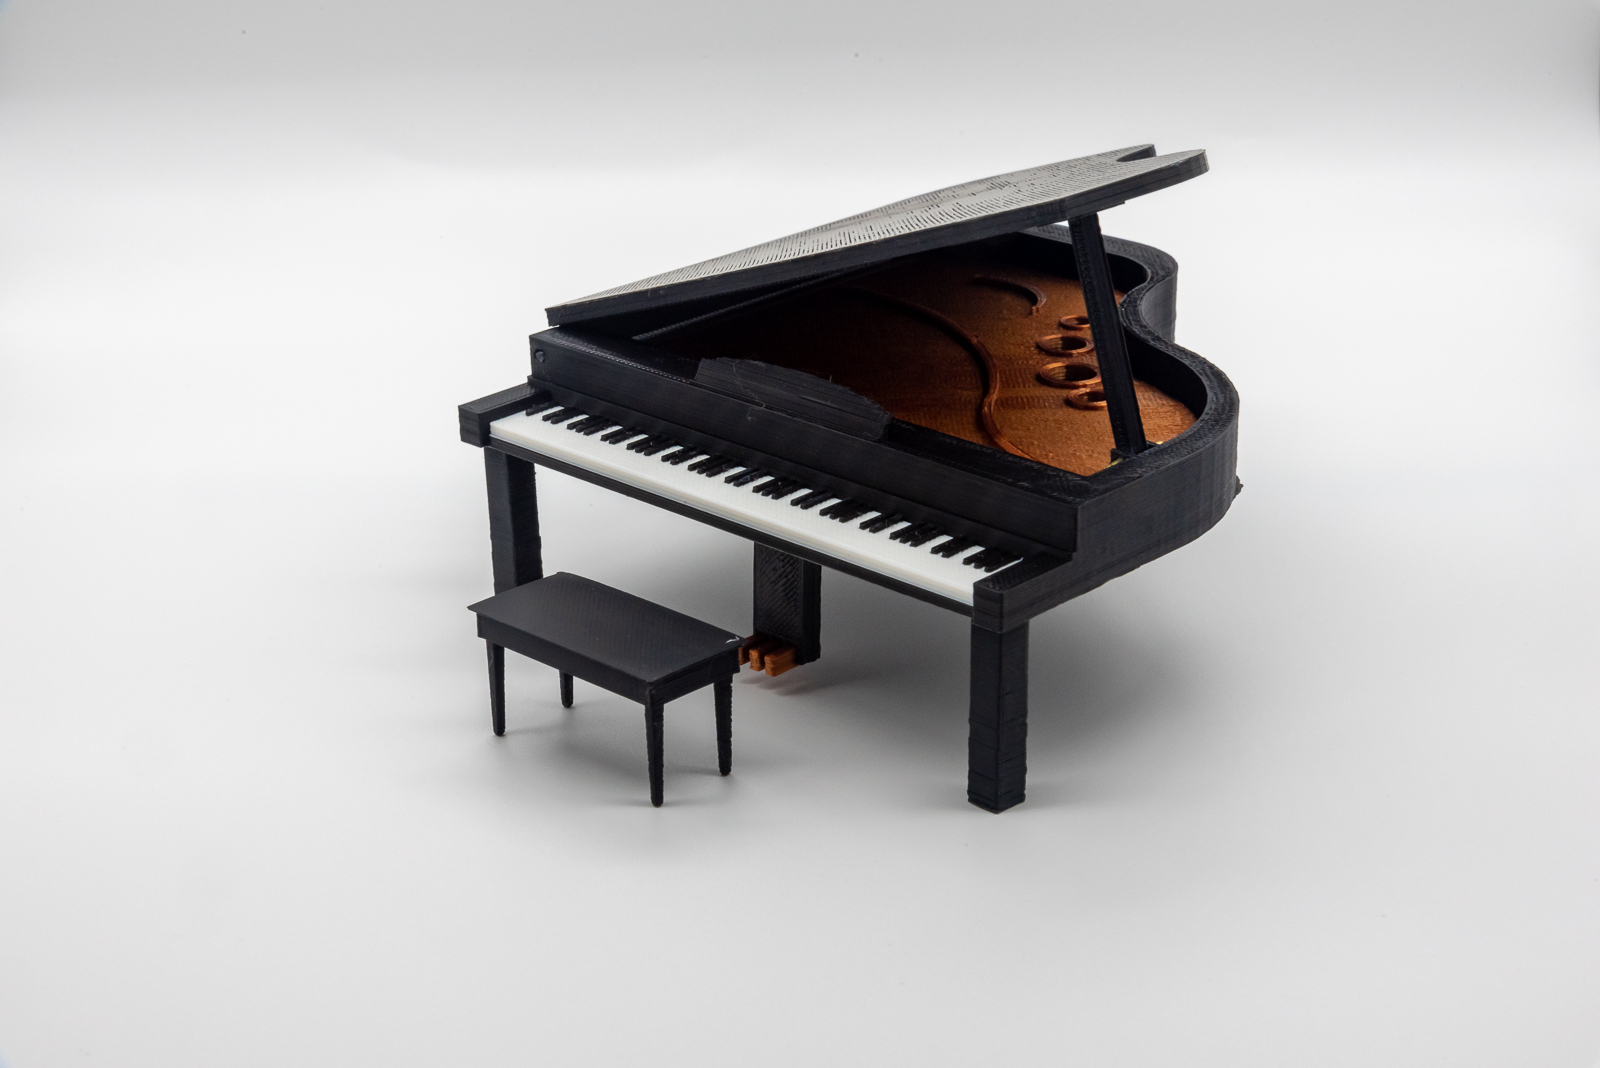 3D Printed Piano - San Jose International Piano Competition